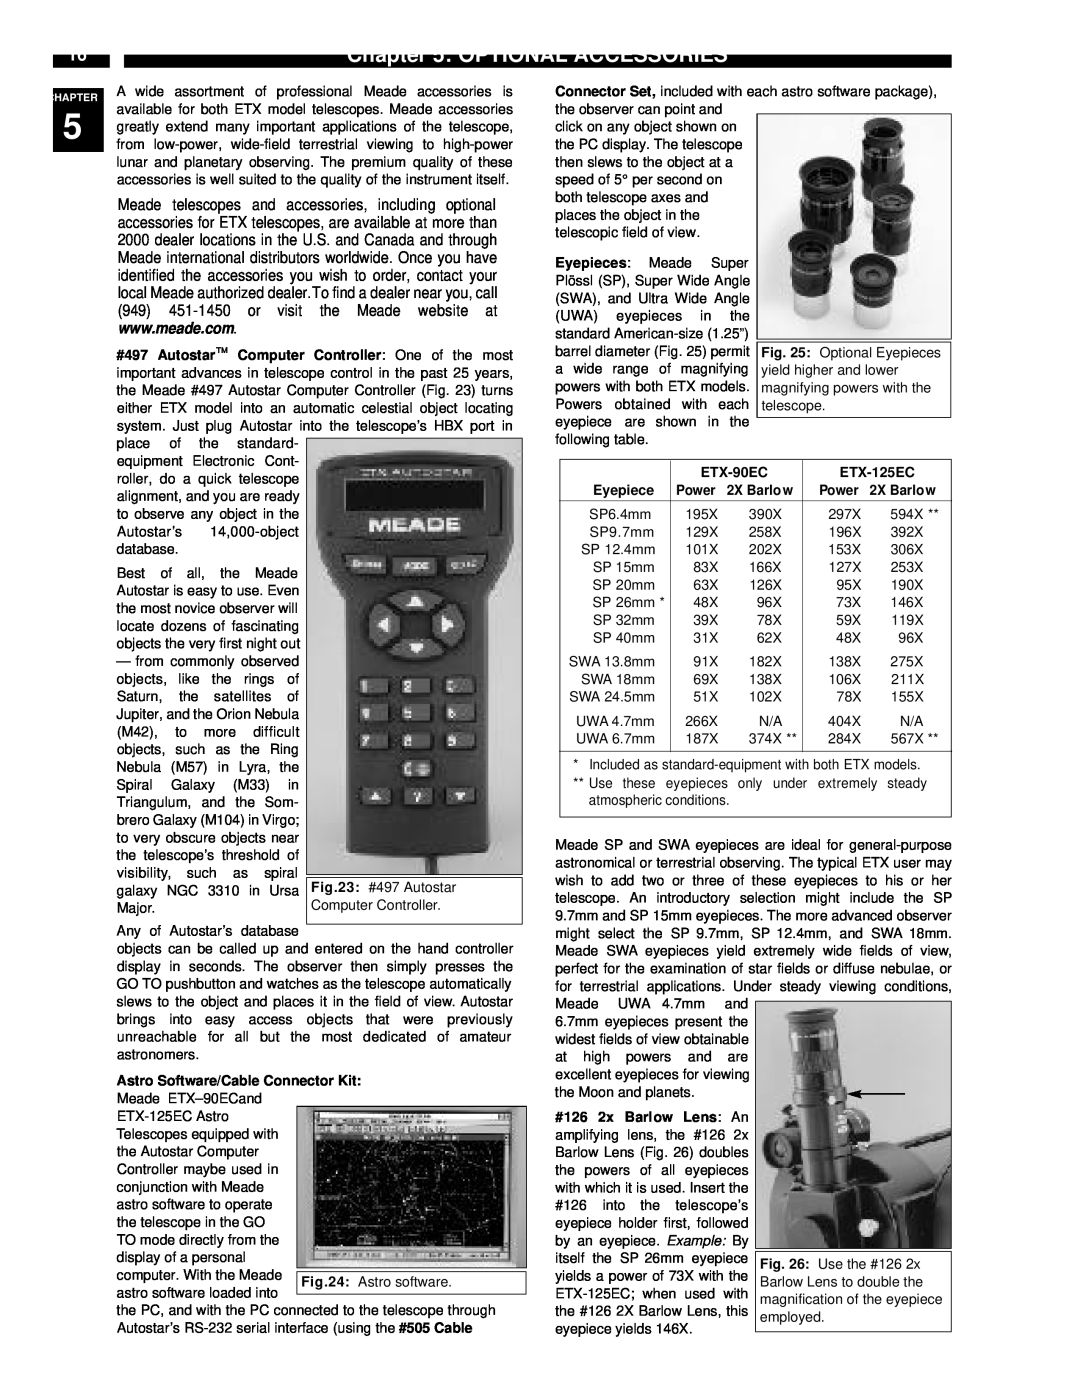 Meade ETX-90EC Optional Accessories, ETX-125EC, Eyepiece, 2X Barlow, Power, Astro Software/Cable Connector Kit 